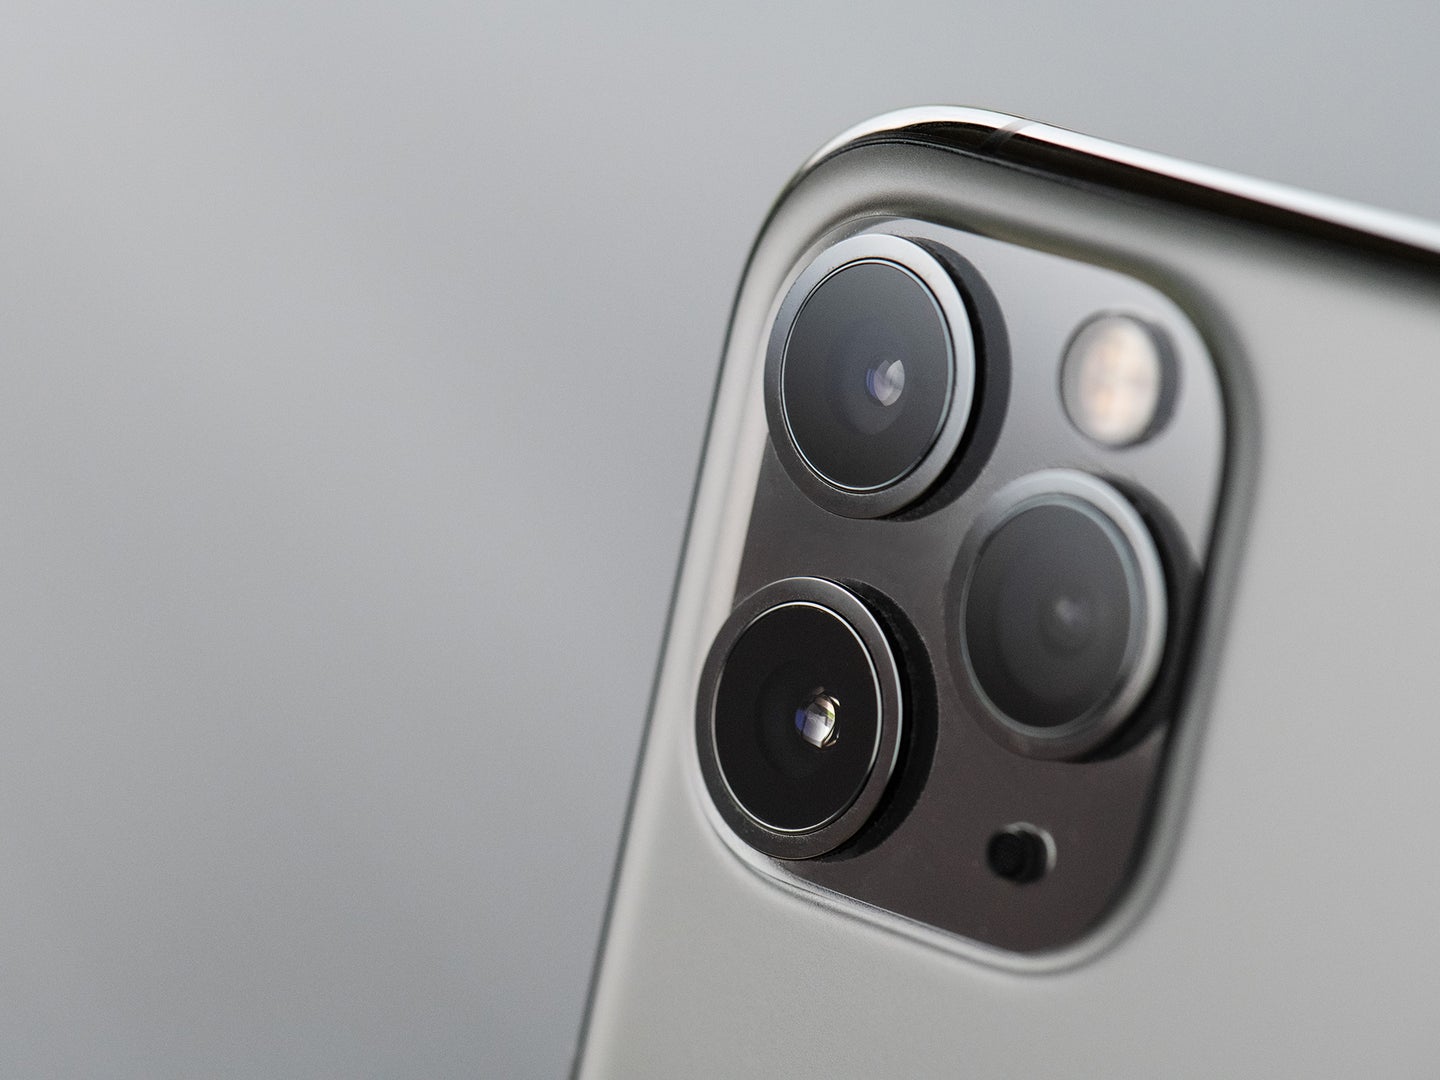 A close-up of an Apple iPhone camera.